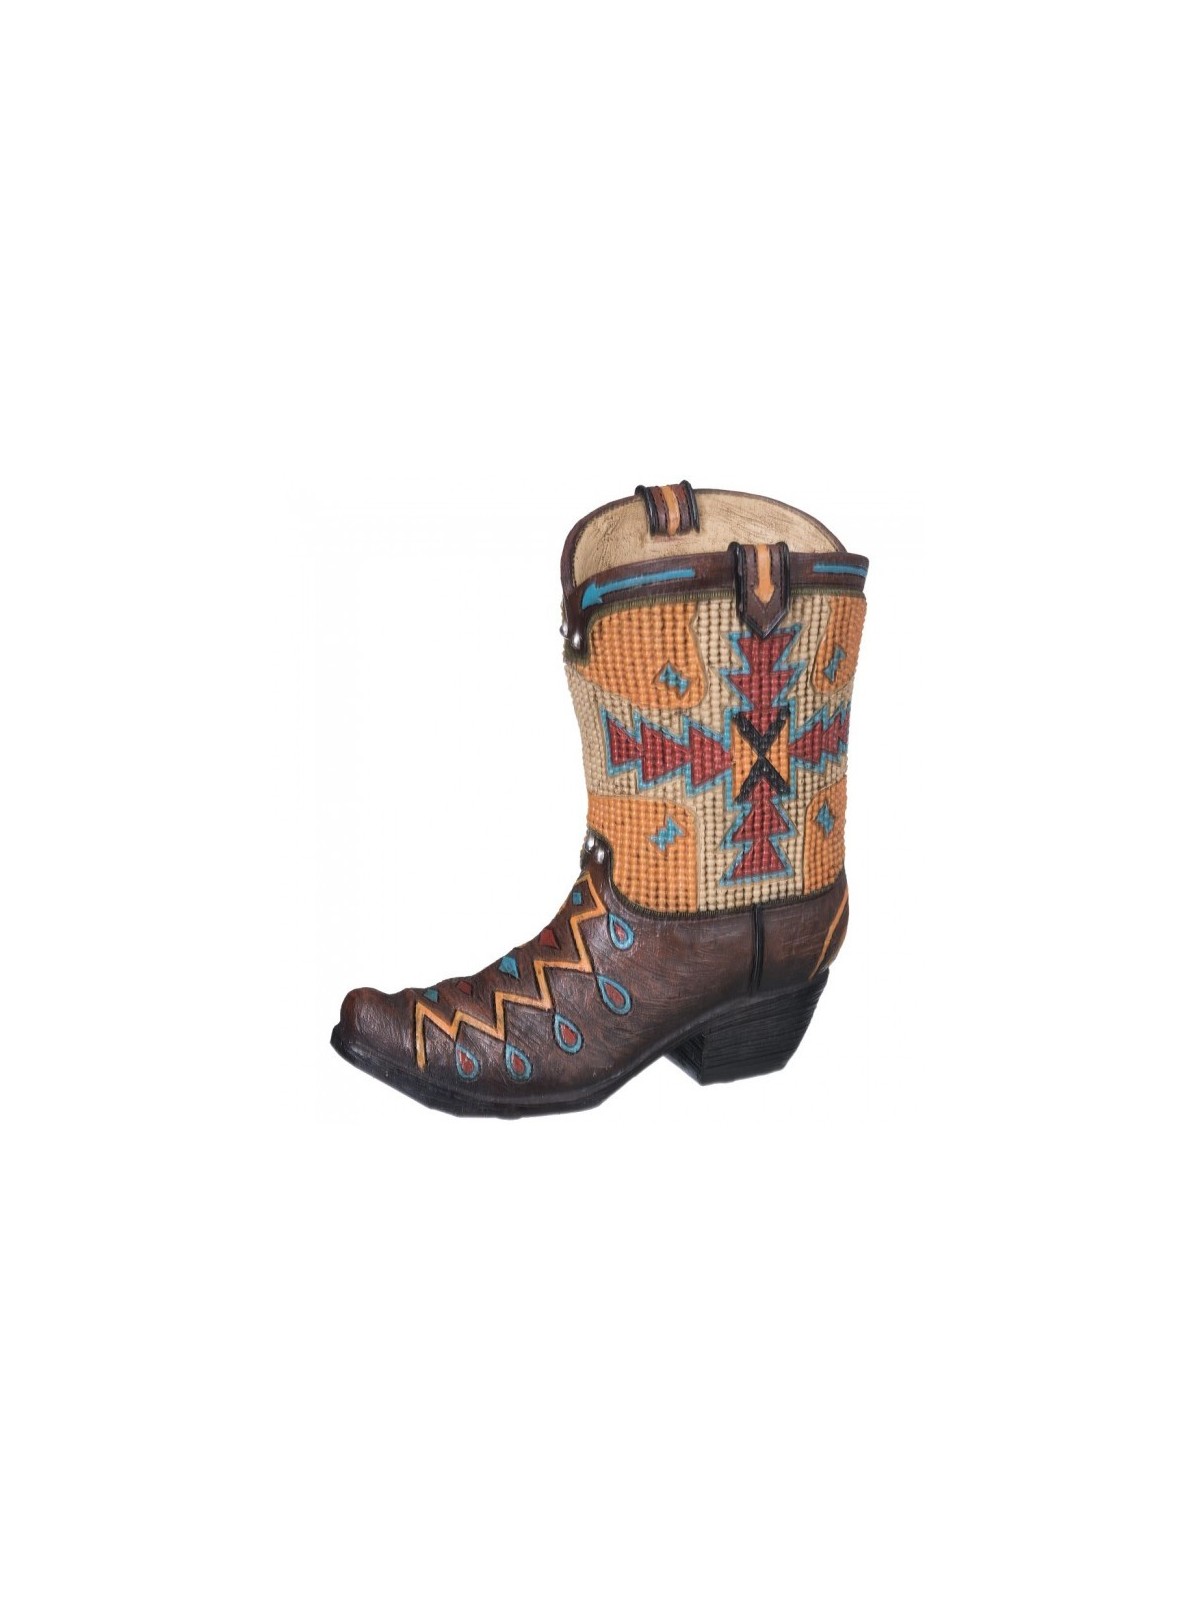 Aztec Cowboy Boot Sparkasse